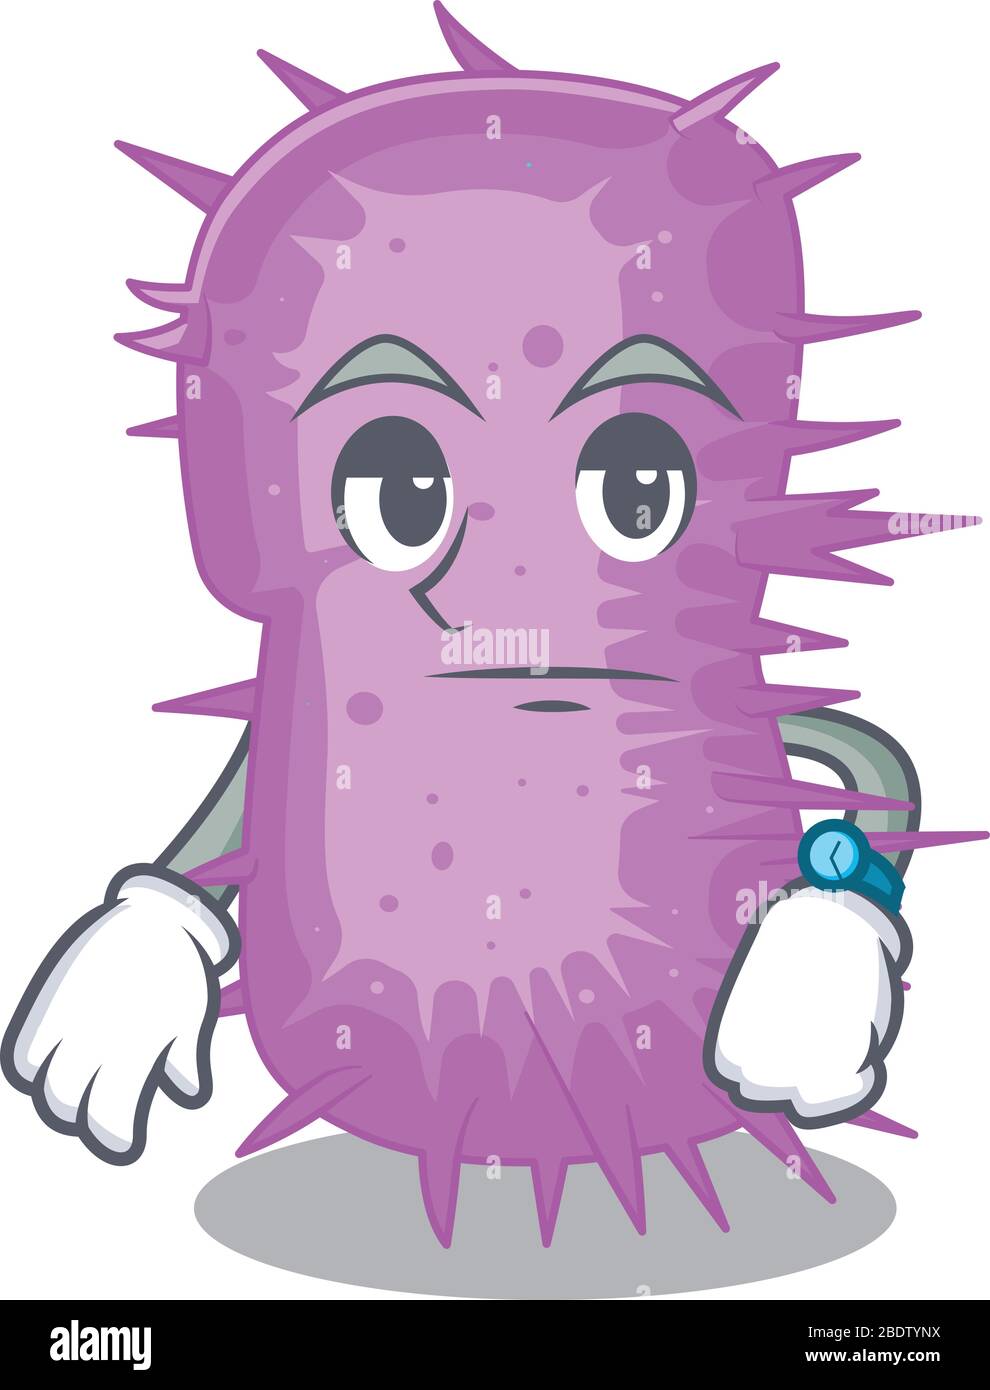 Mascot design of acinetobacter baumannii showing waiting gesture Stock Vector